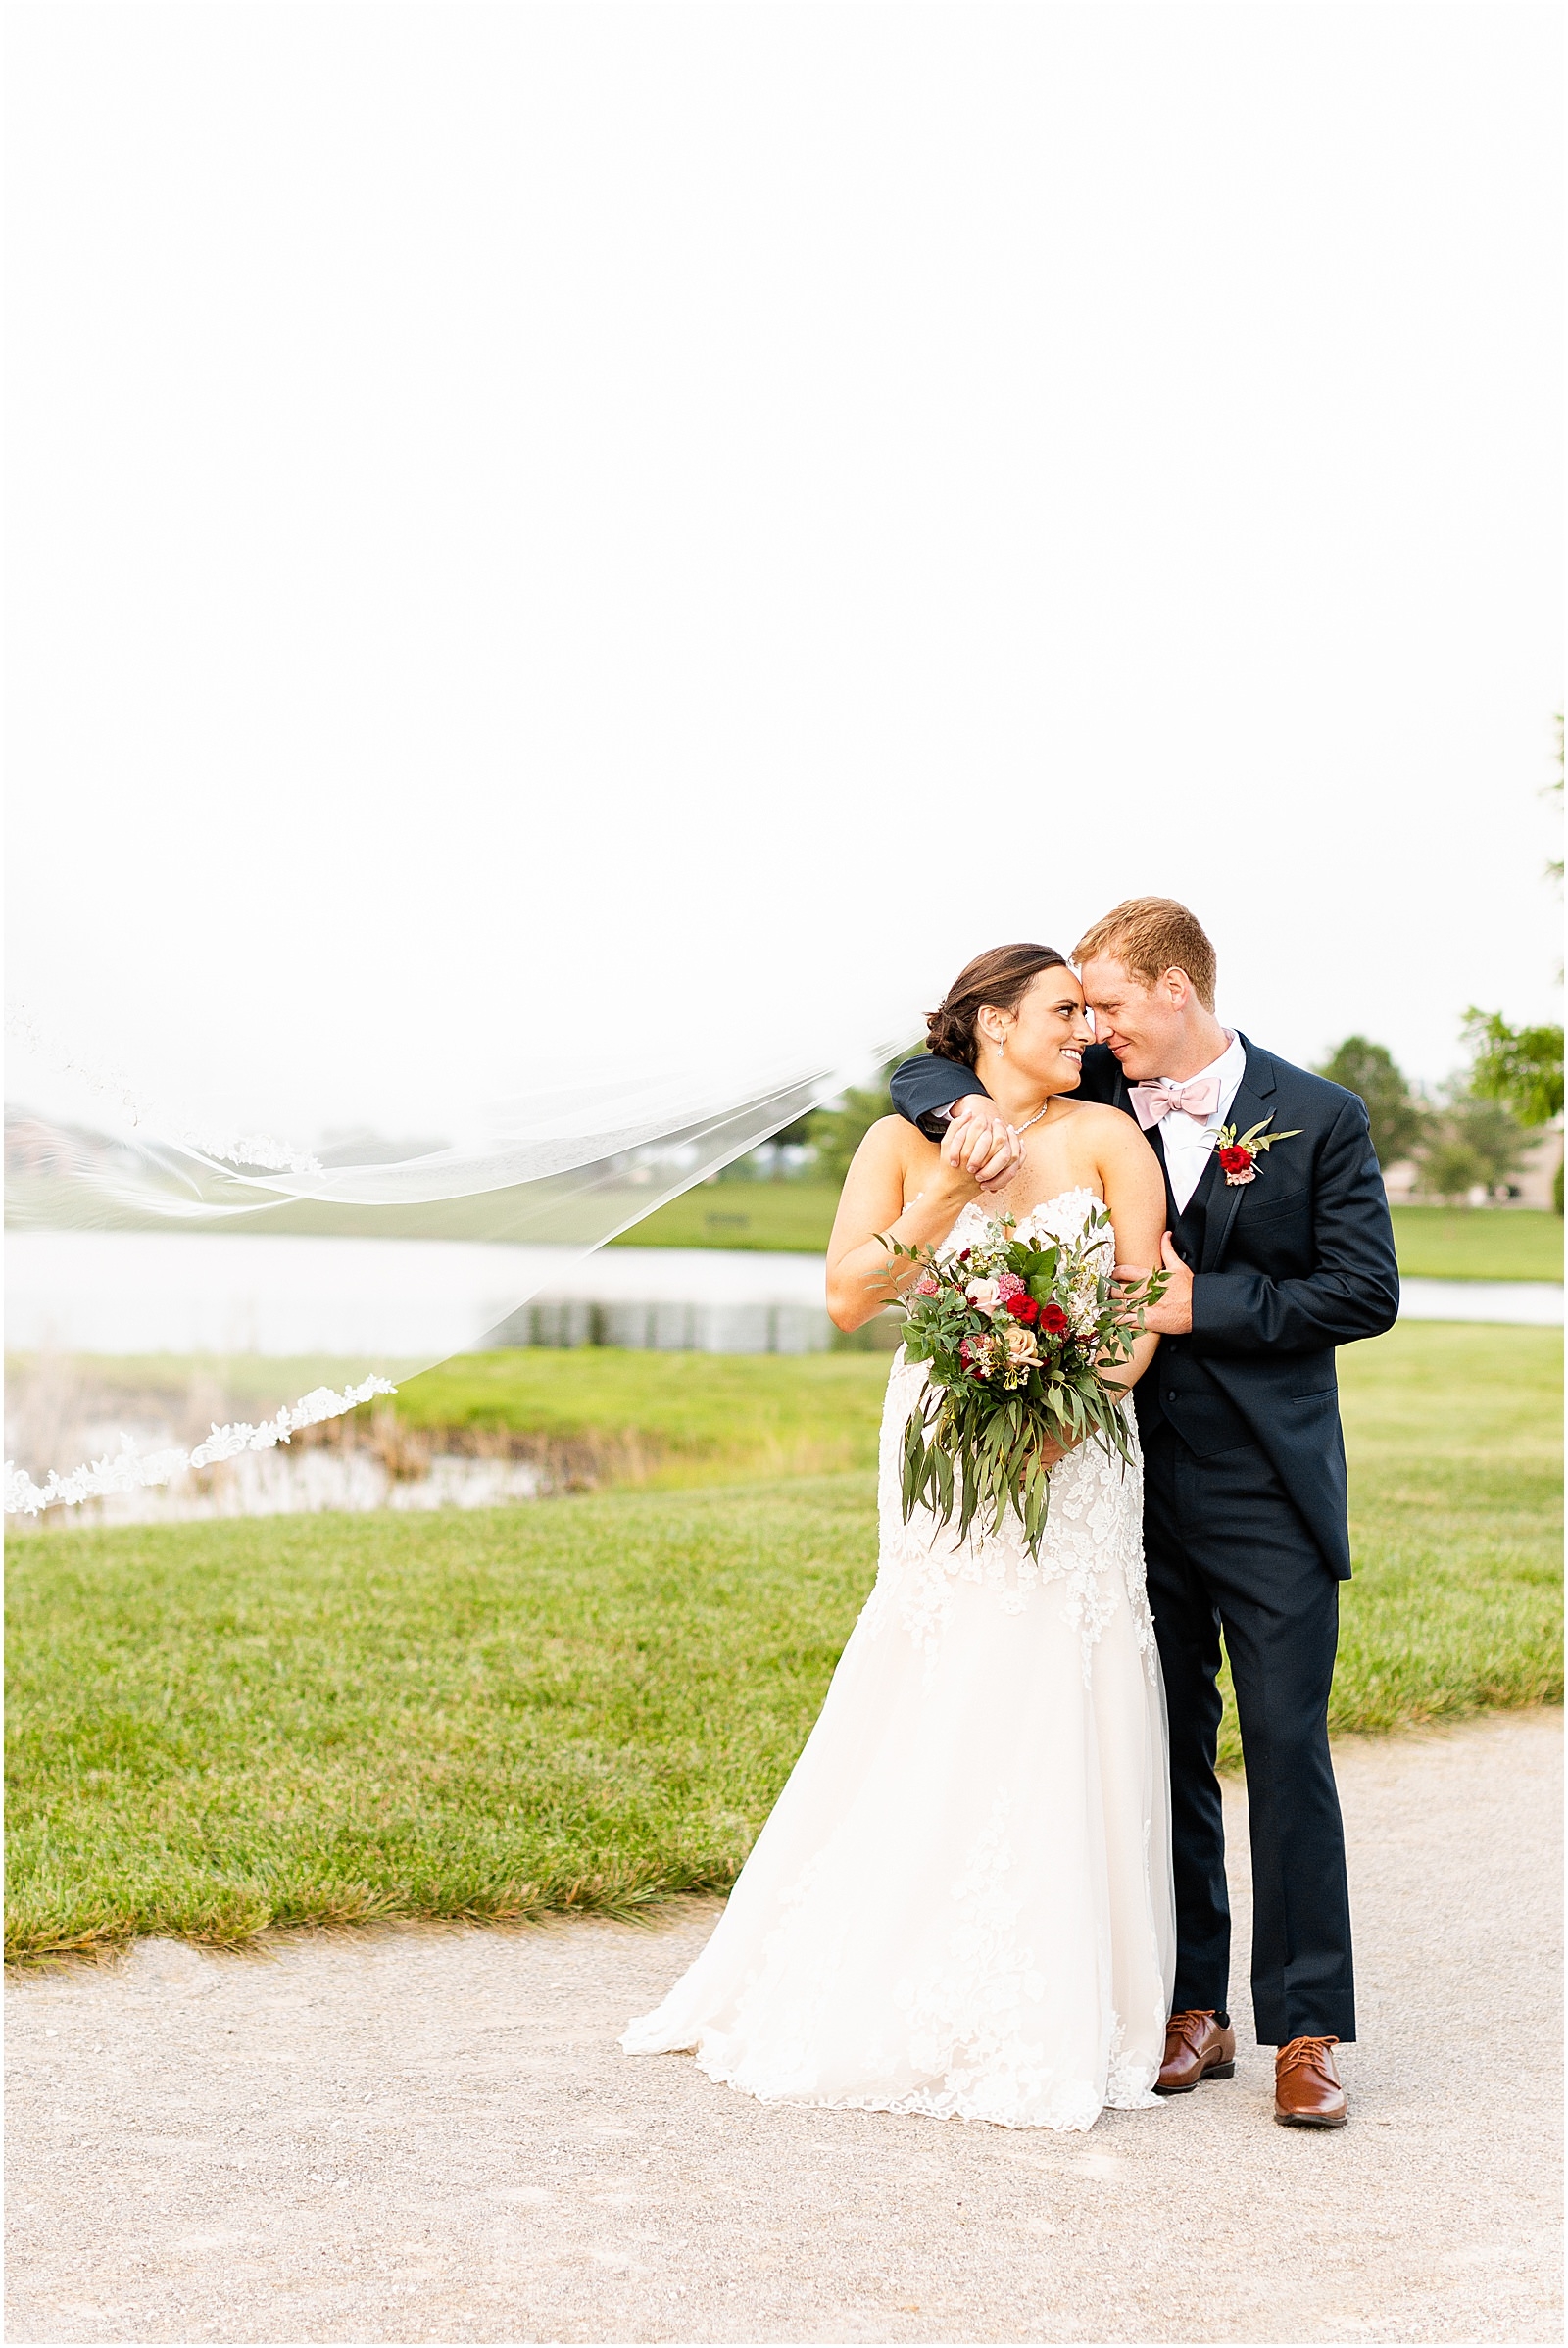 Deidra and Andrew | A Huntingburgh Indiana Wedding Bret and Brandie | Evansville Photographers | @bretandbrandie-0135.jpg